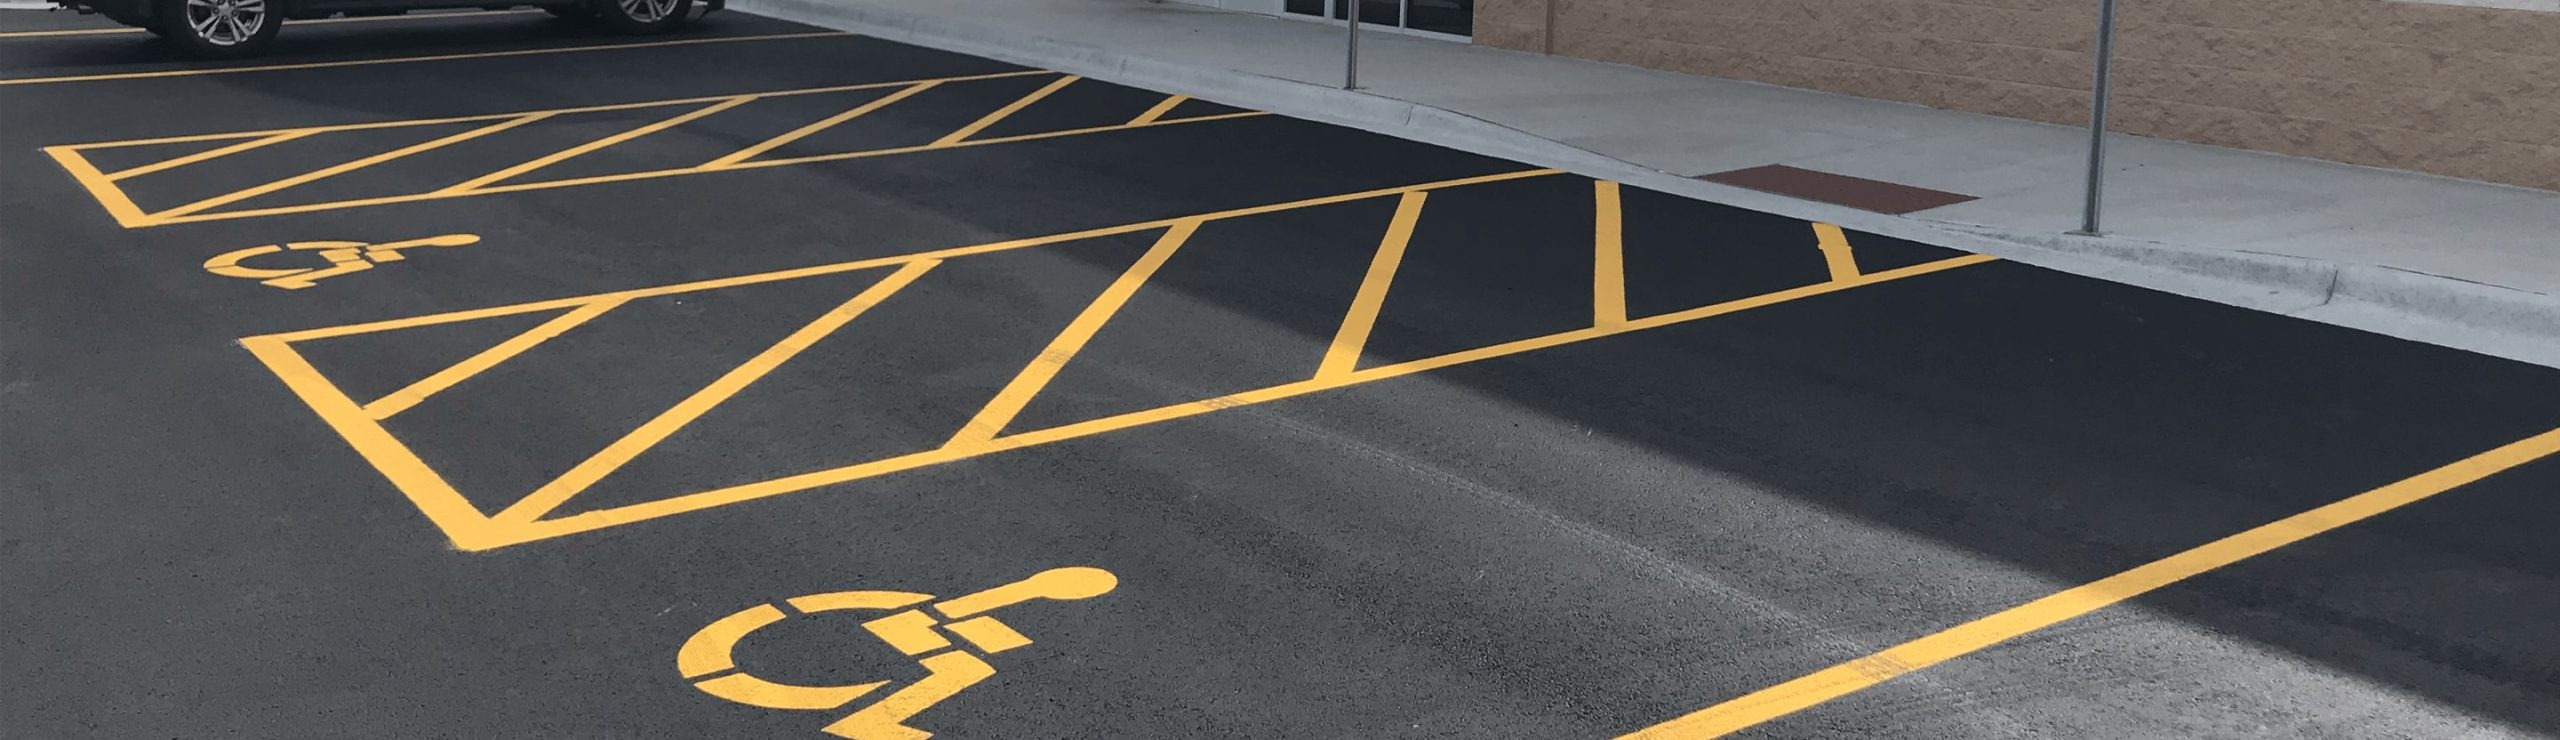 handicap parking spaces